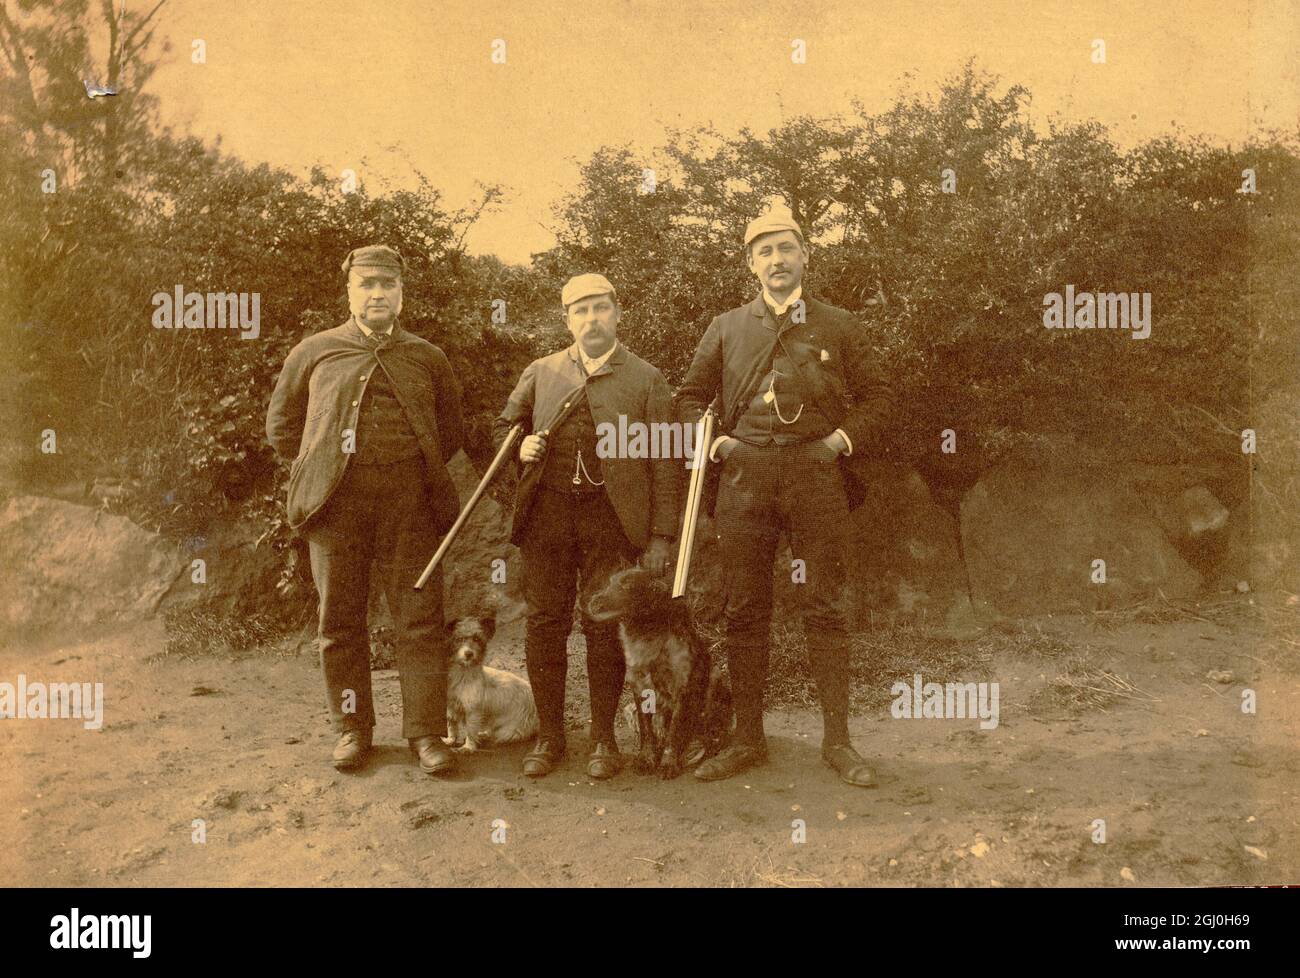 Shooting - men with rifles - gun dogs at their feet Stock Photo